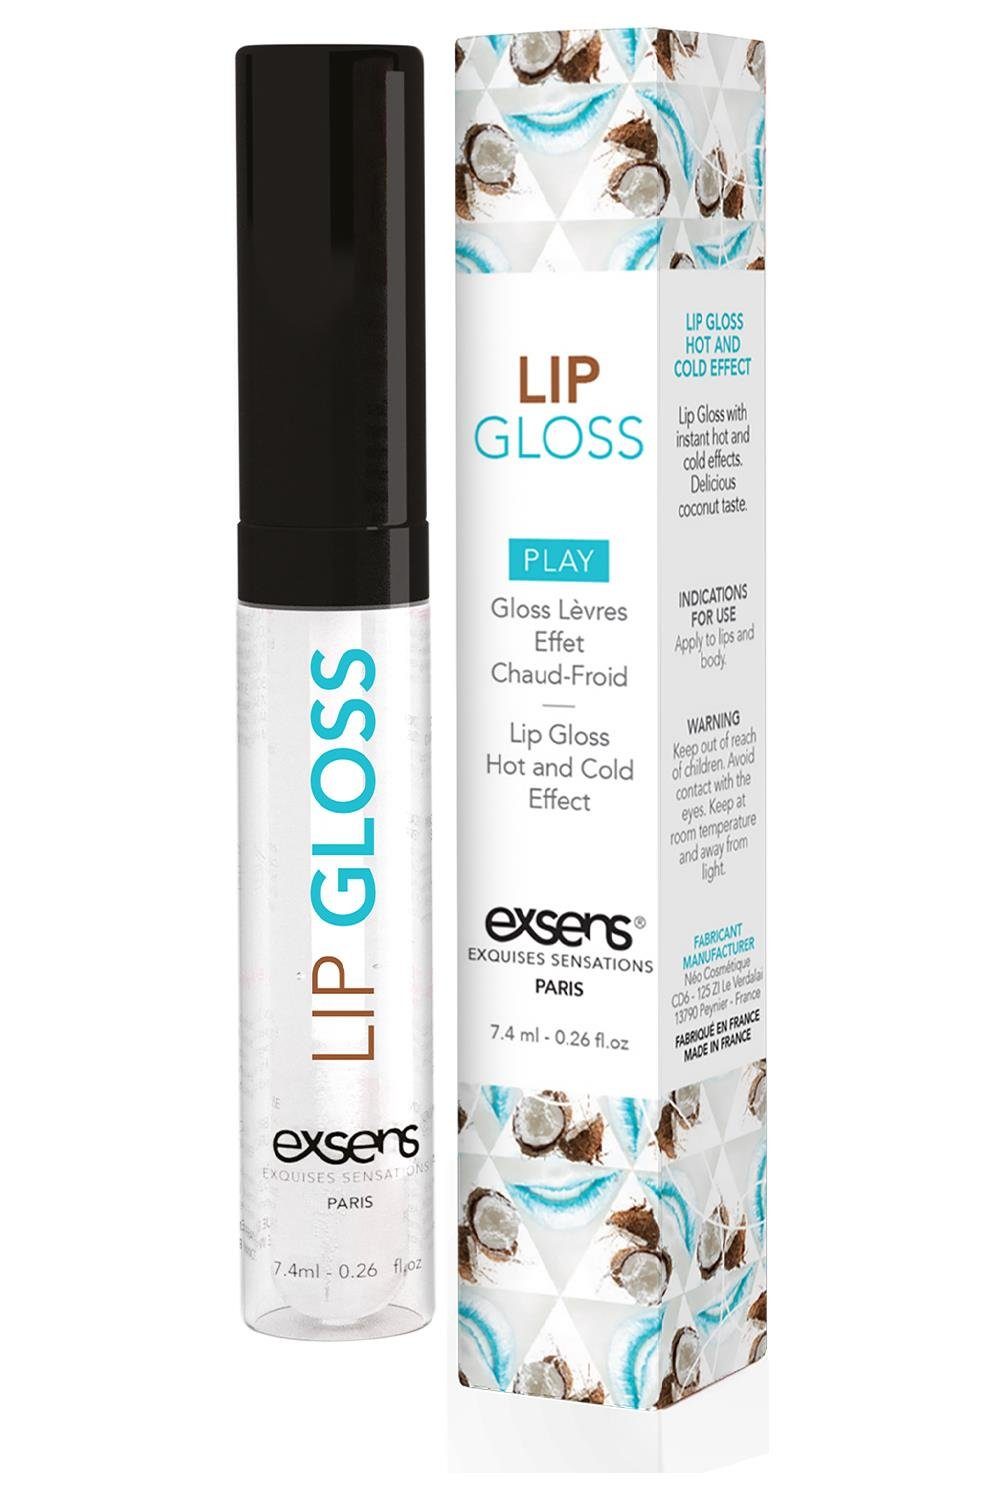 Coconut Exsens Gloss klebrig Exsens Kiss Lipgloss Lip Farblos, nicht Hot 7,4ml,